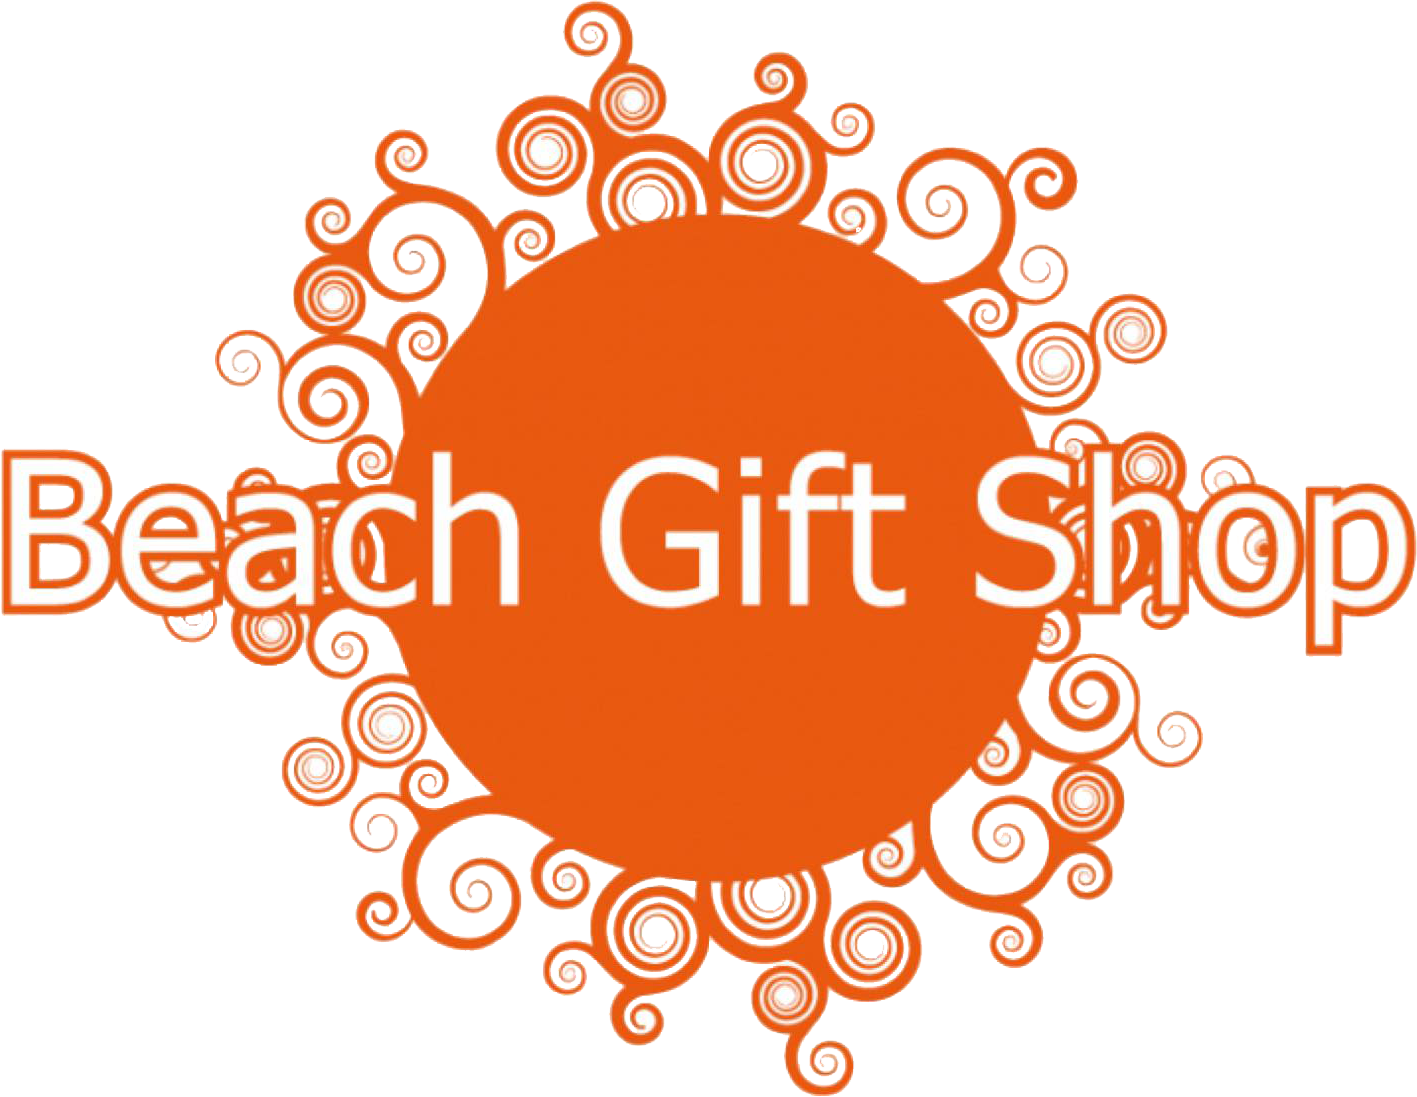 Beach Gift Shop - Hoek van Holland